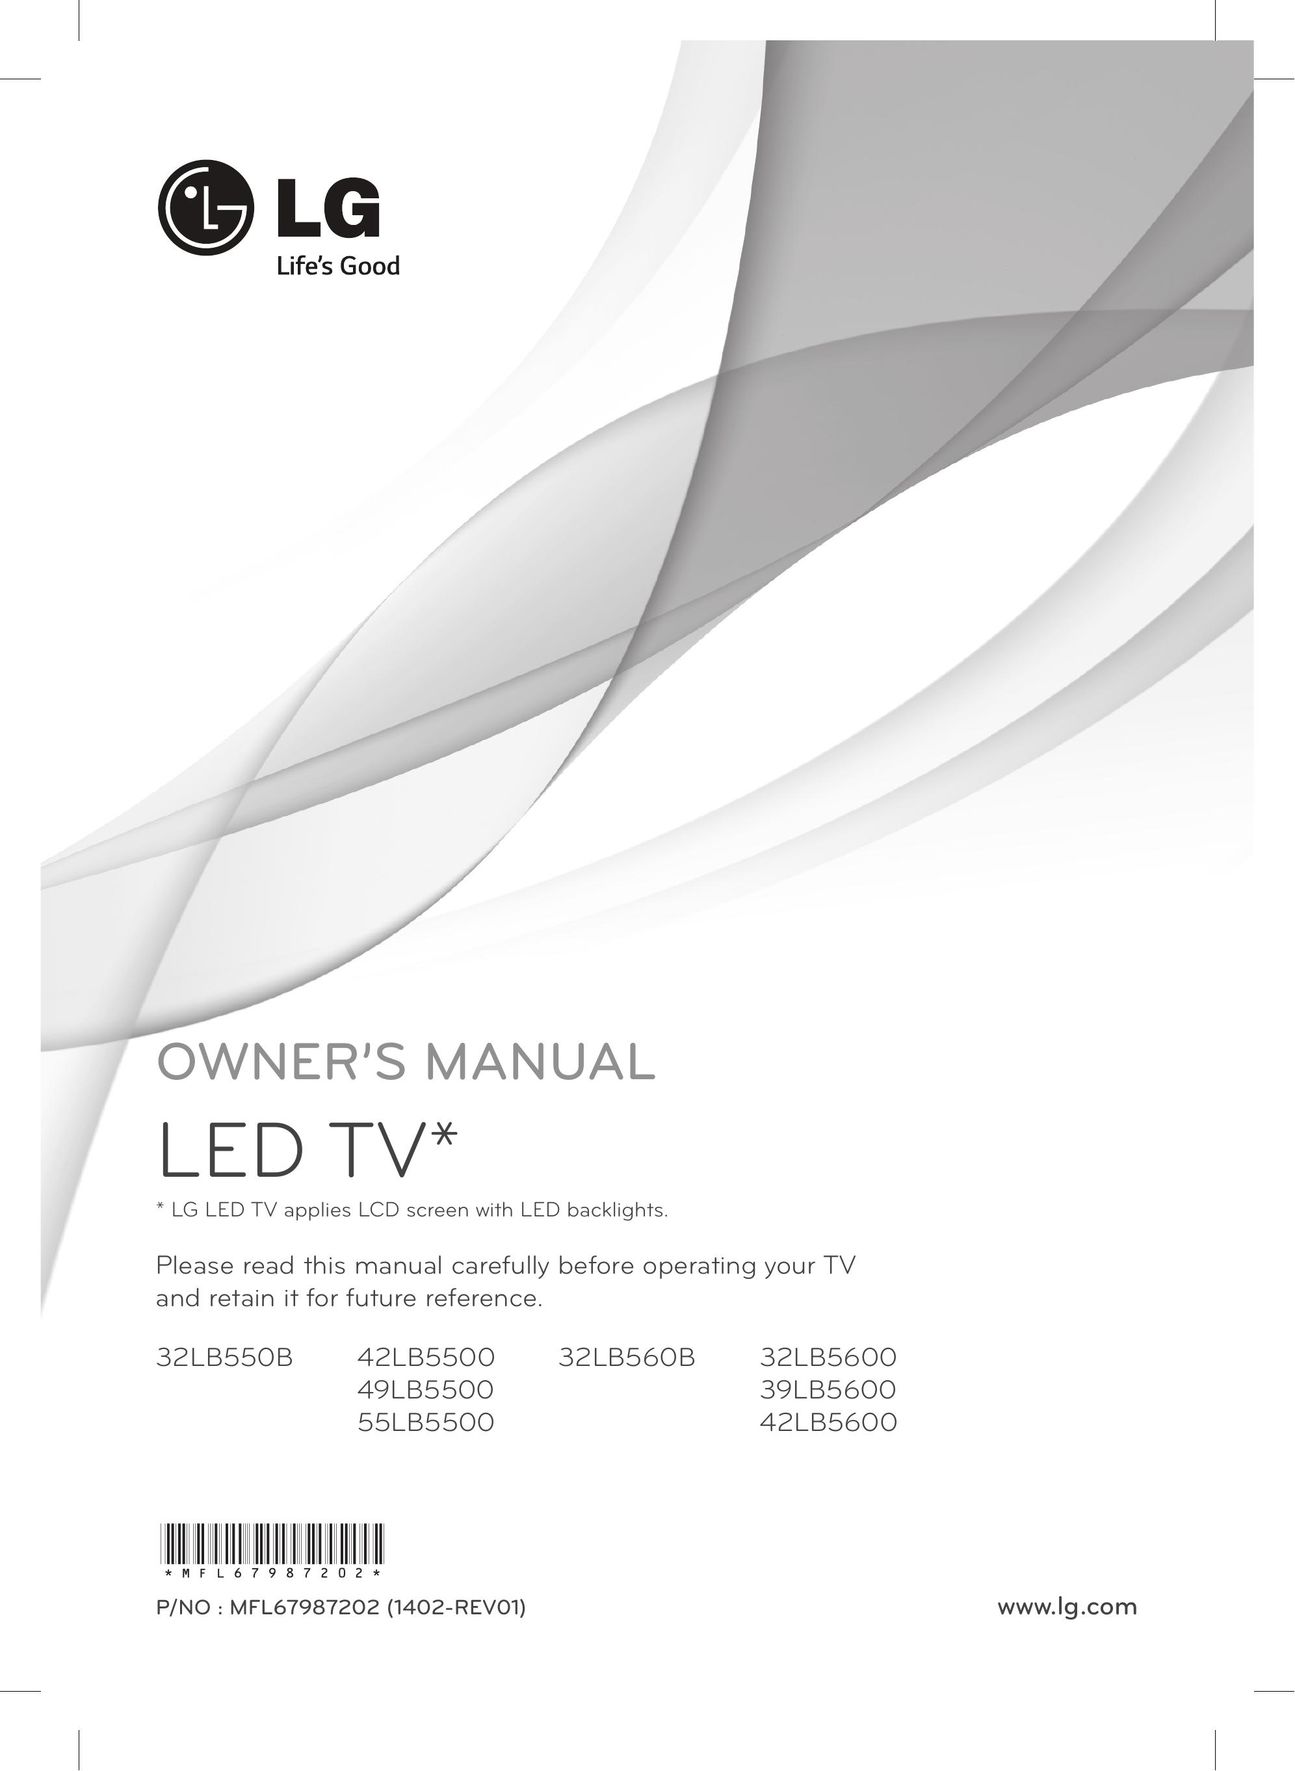 Samsung 39LB5600 Flat Panel Television User Manual